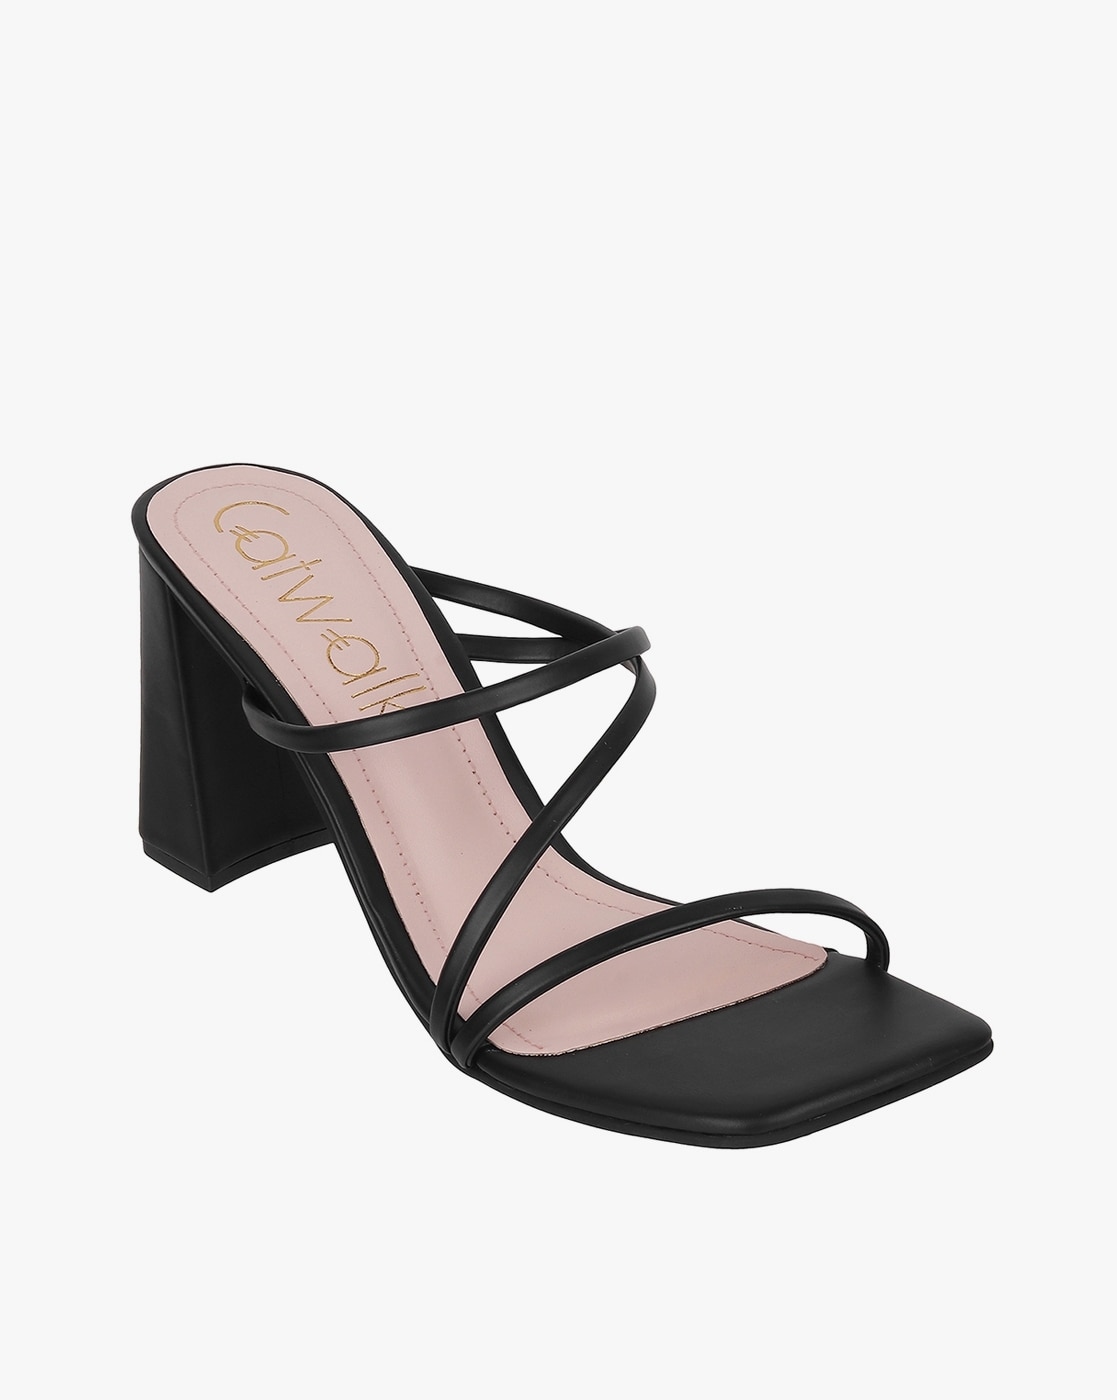 Shop 20cm Catwalk Heels with great discounts and prices online - Dec 2023 |  Lazada Philippines